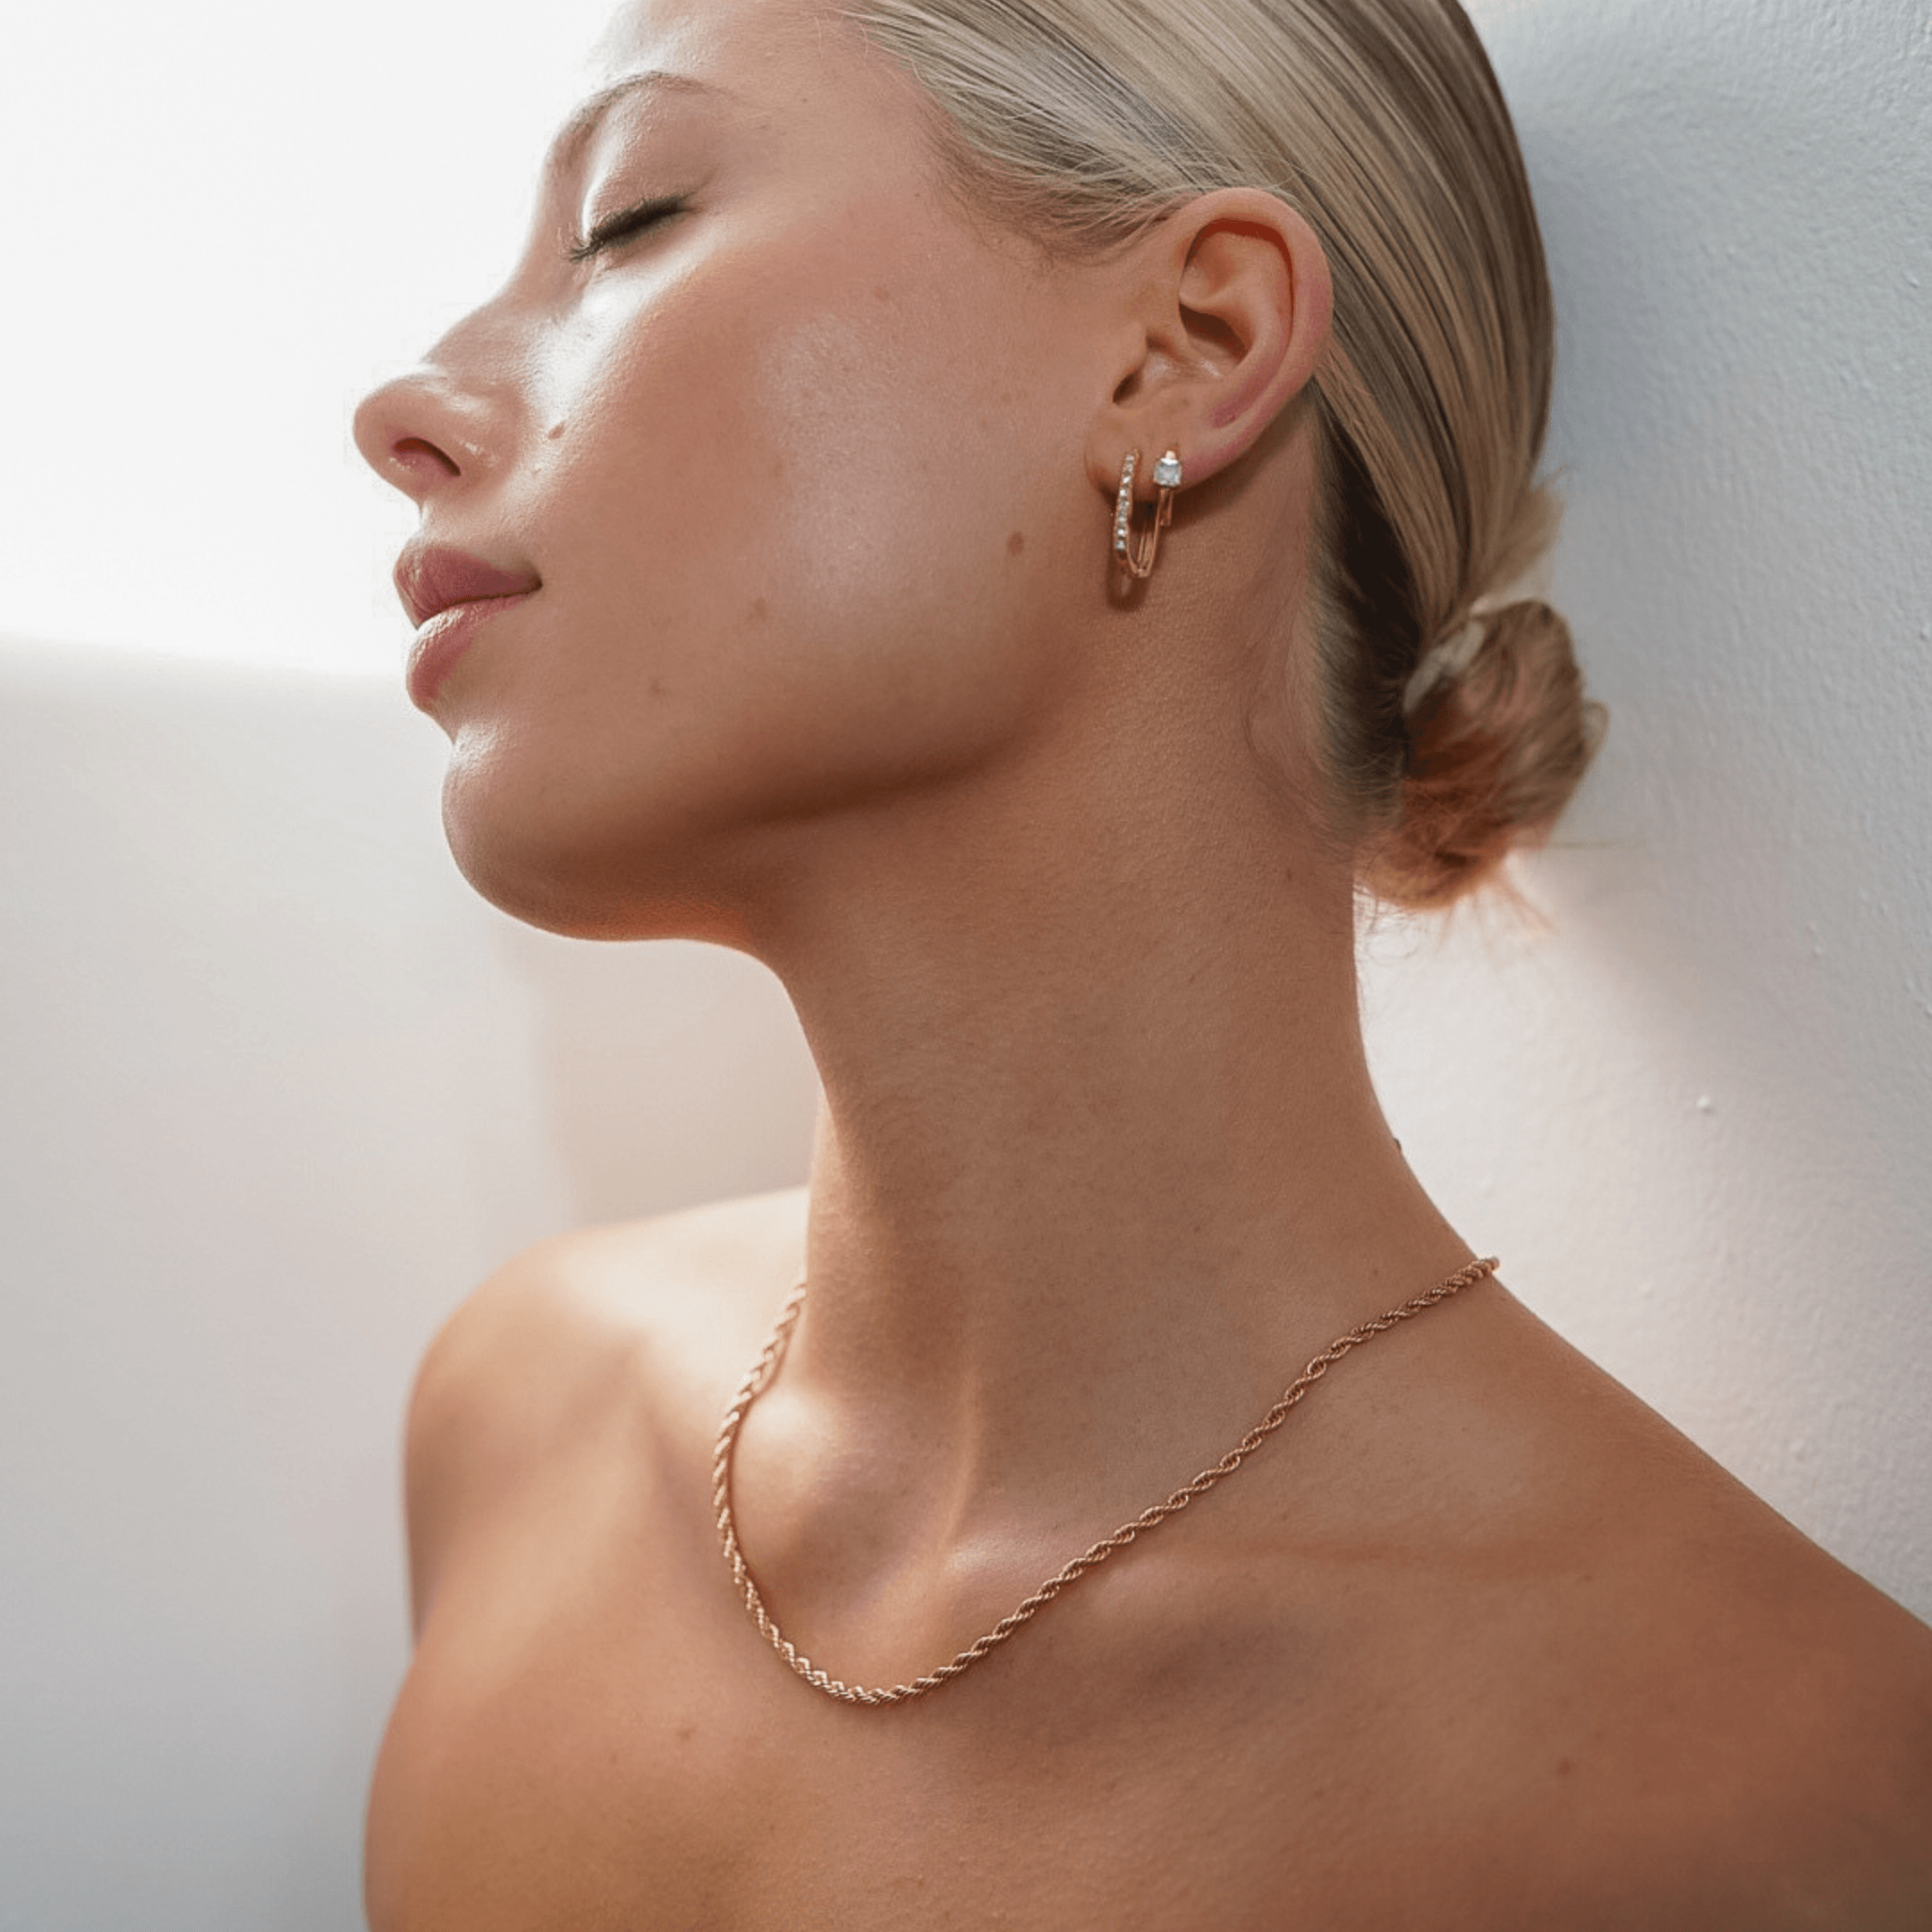 Thin Rope Chain Necklace - Gold – La Musa Jewellery